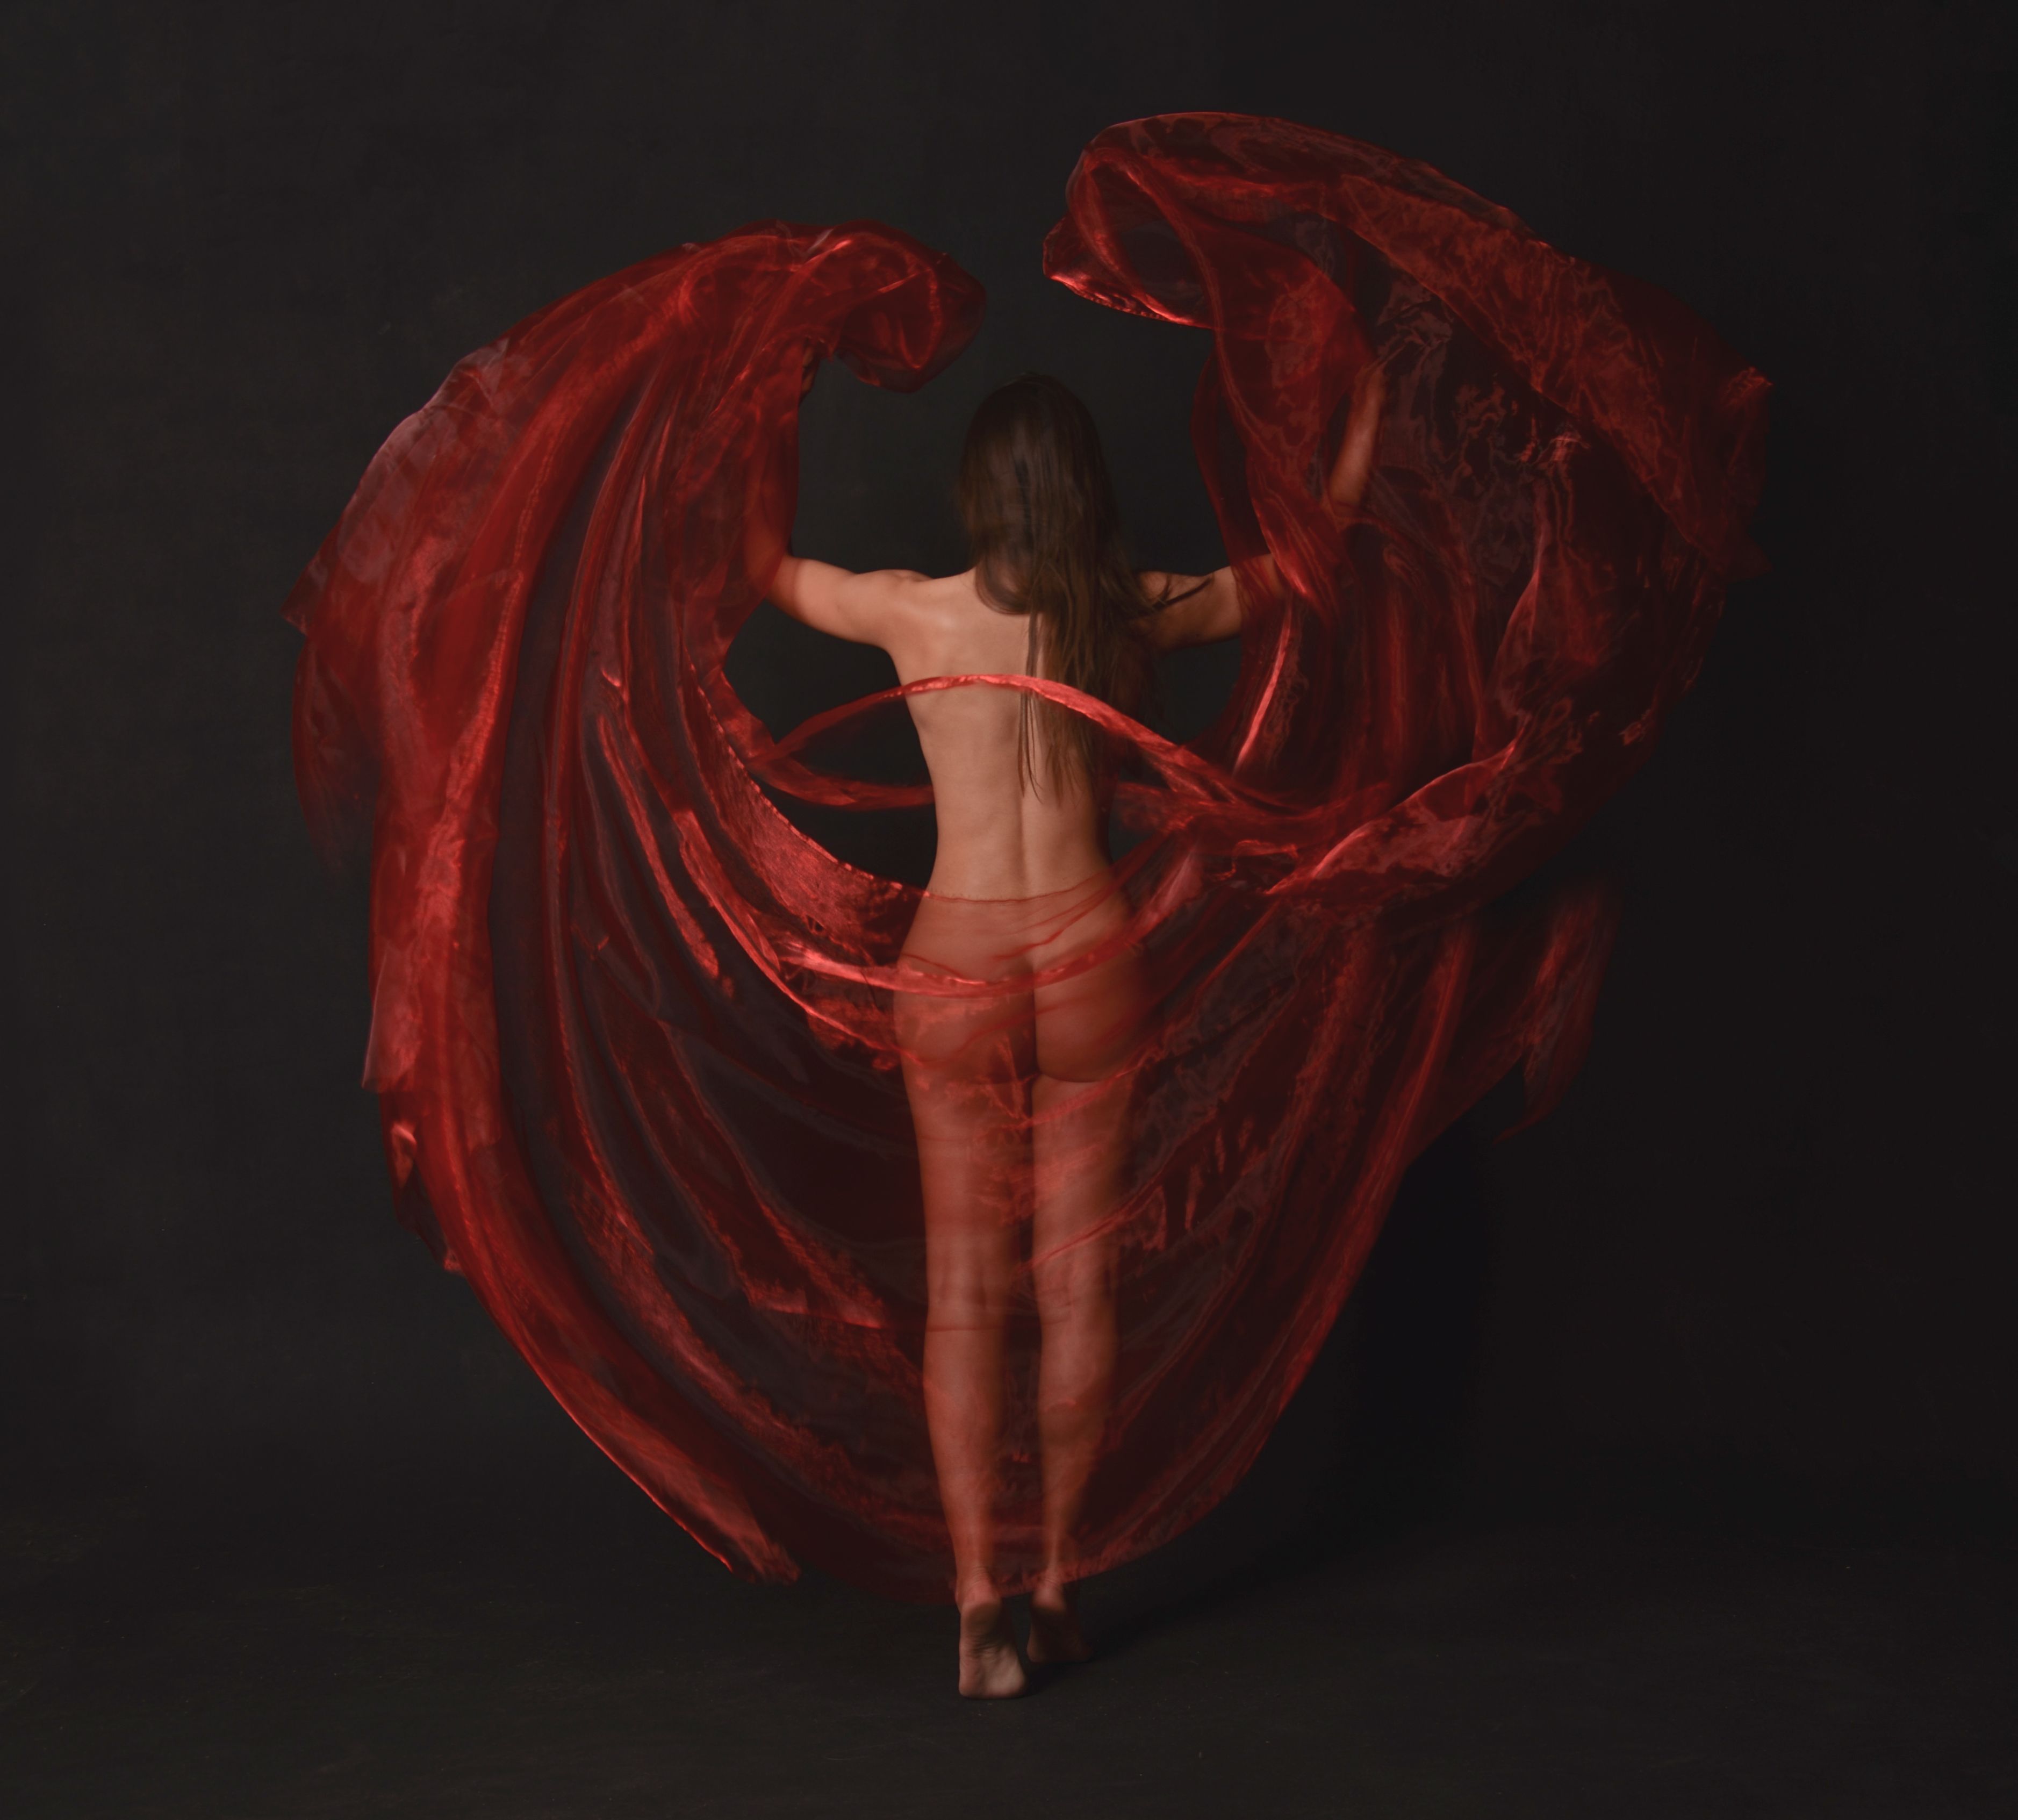 #wings #red #magic #noedit #artportrait #artconcept #conceptart #nikonua #nikonportrait #silk #bodyline #modelkharkiv #ukraineart, Евгений Вознюк